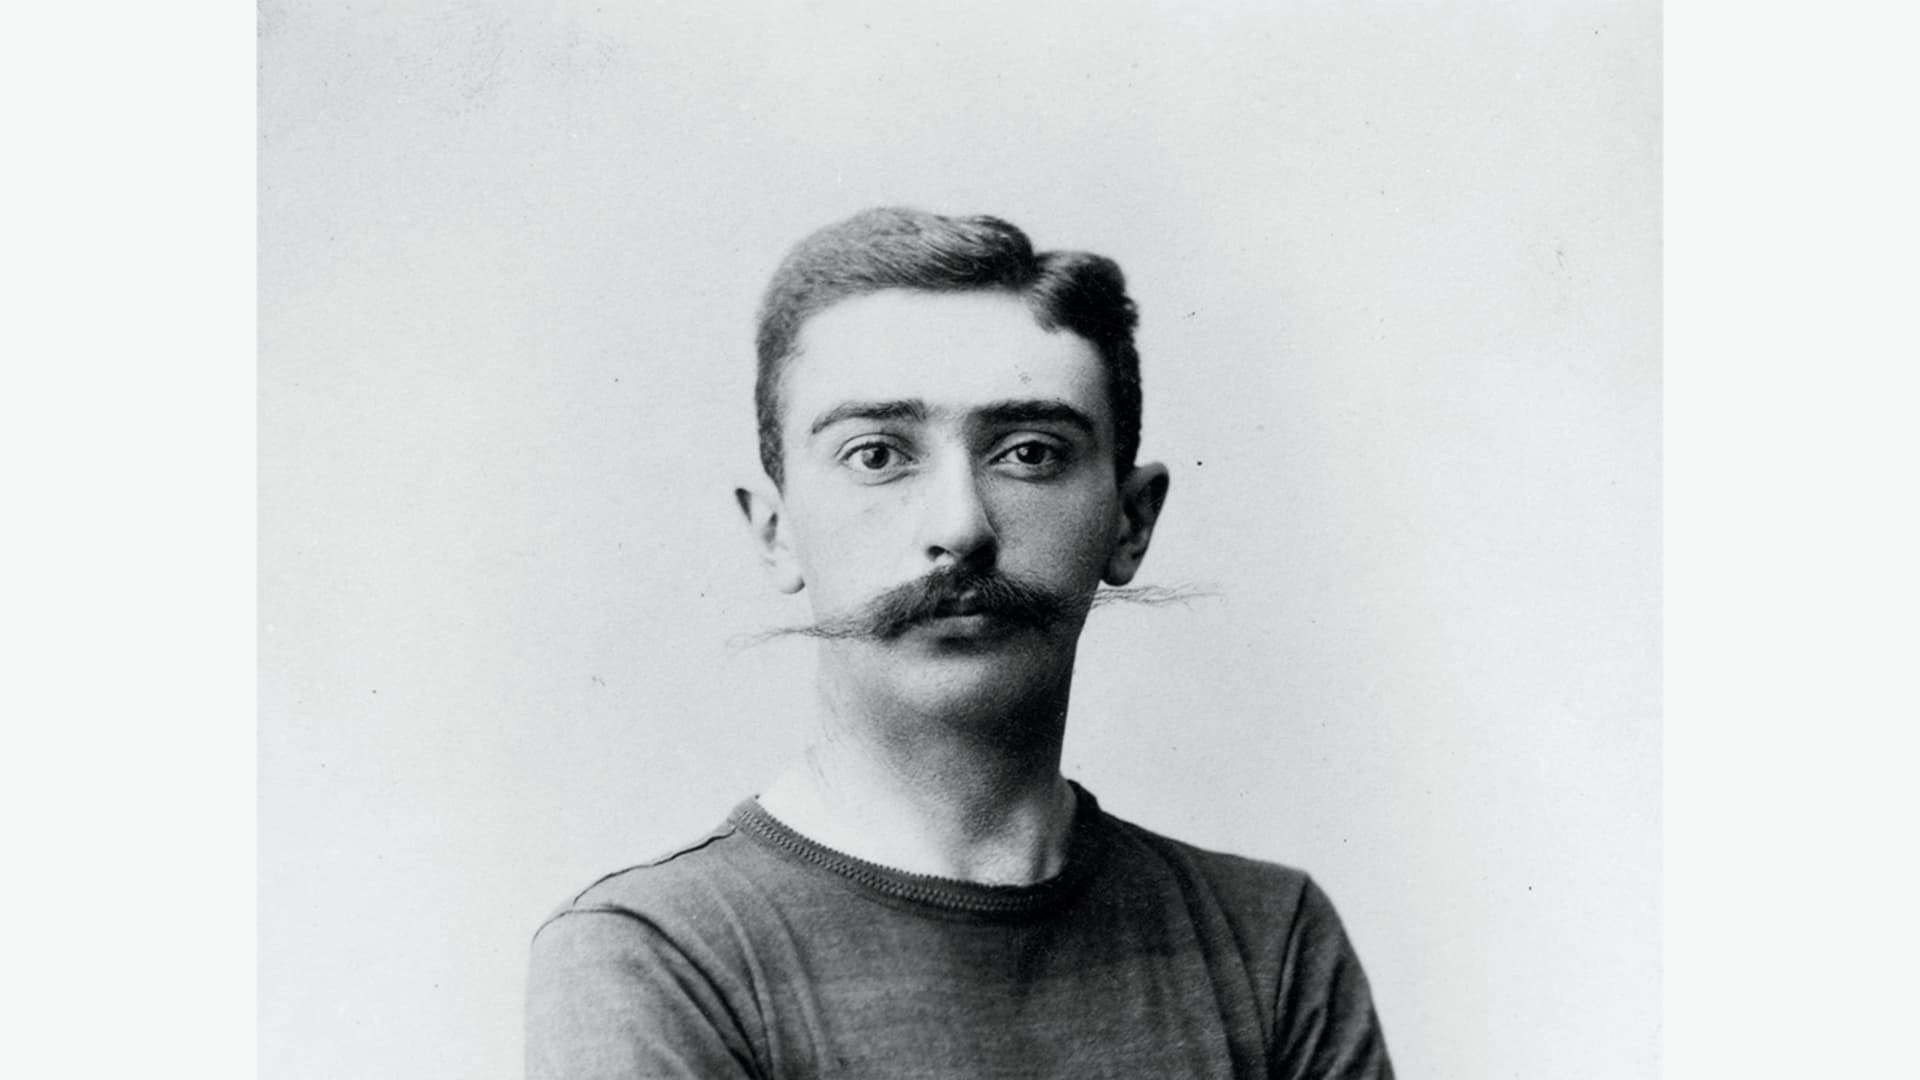 Pierre de Coubertin dressed in a sports kit in 1889